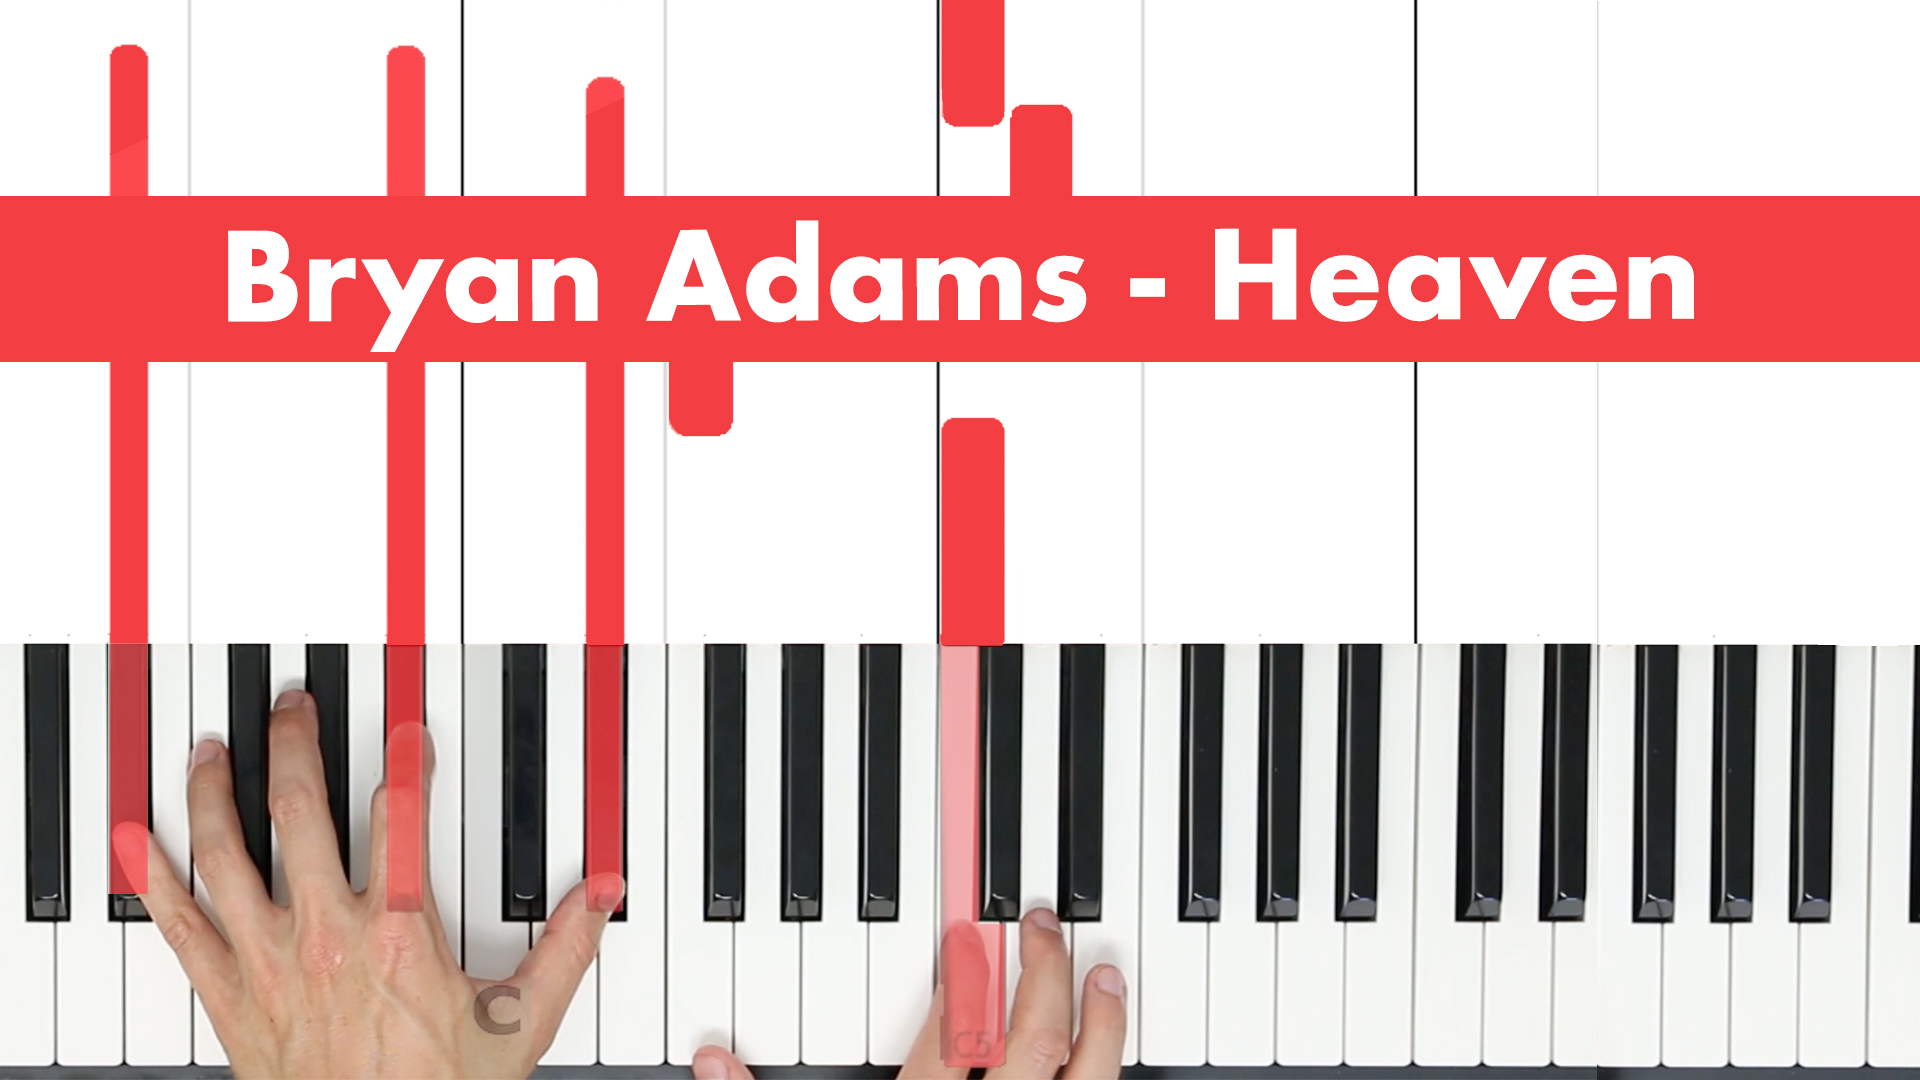 Bryan Adams – Heaven – Easy